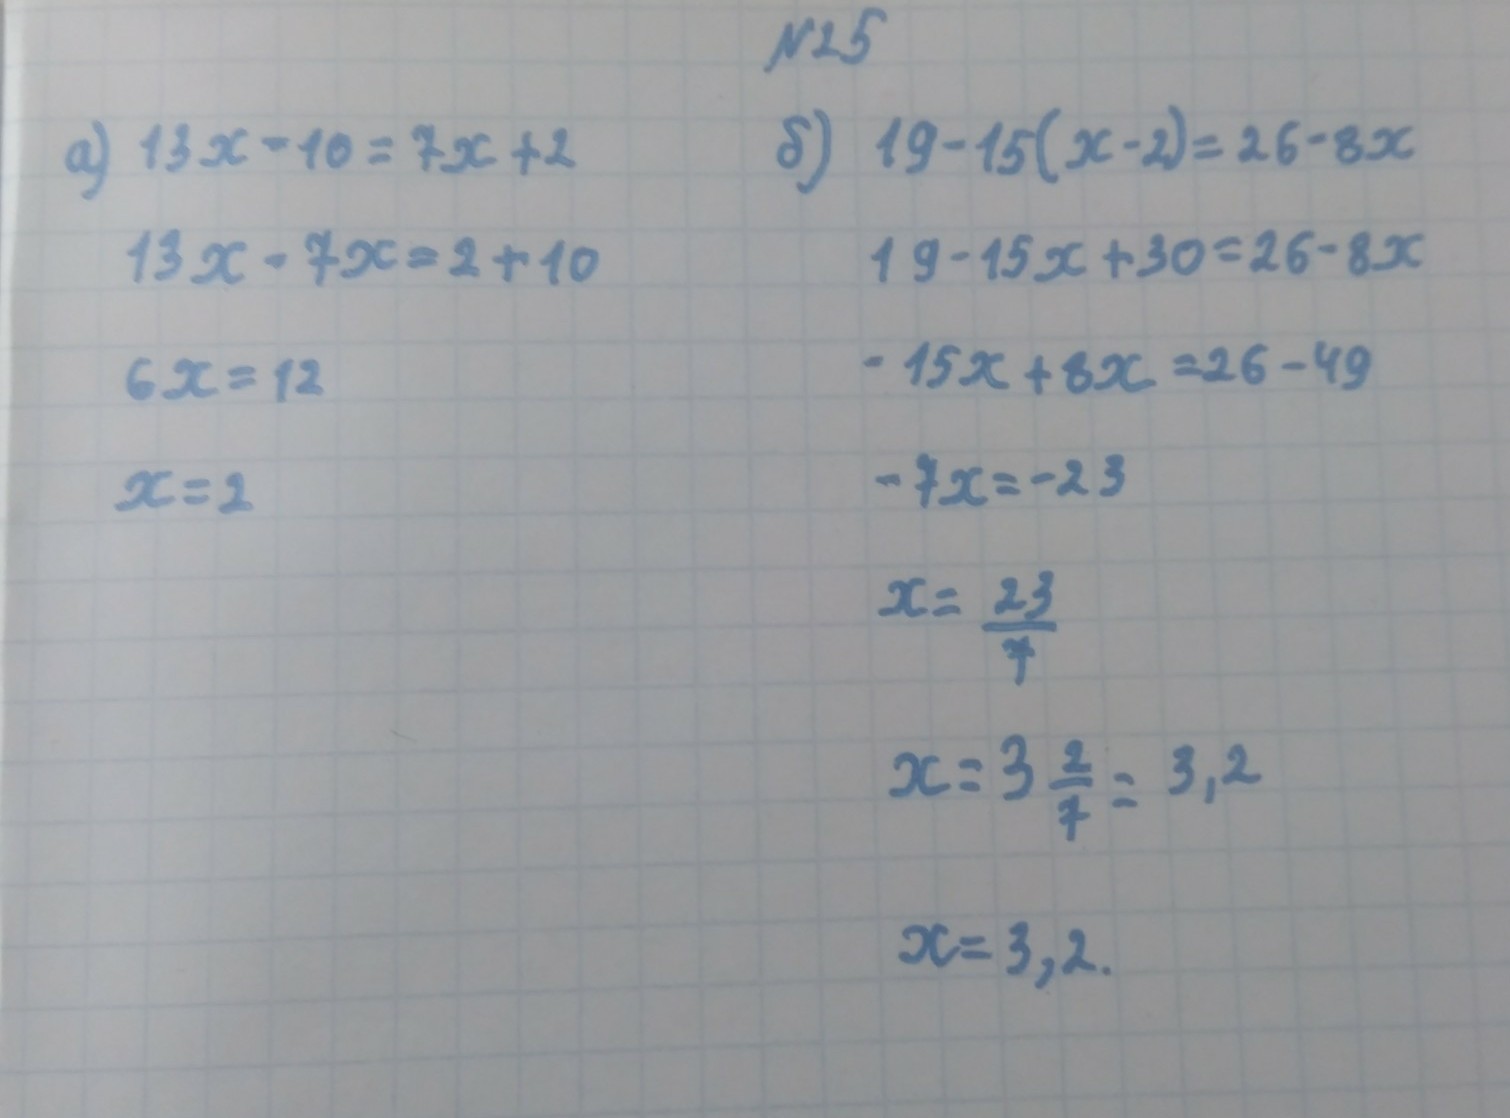 X 13 x 10 1. 13/X-2+2/X-13 2. (13-Х)(13-X) решение. 13x-26=130 решение. 13х-26 -130 решить.